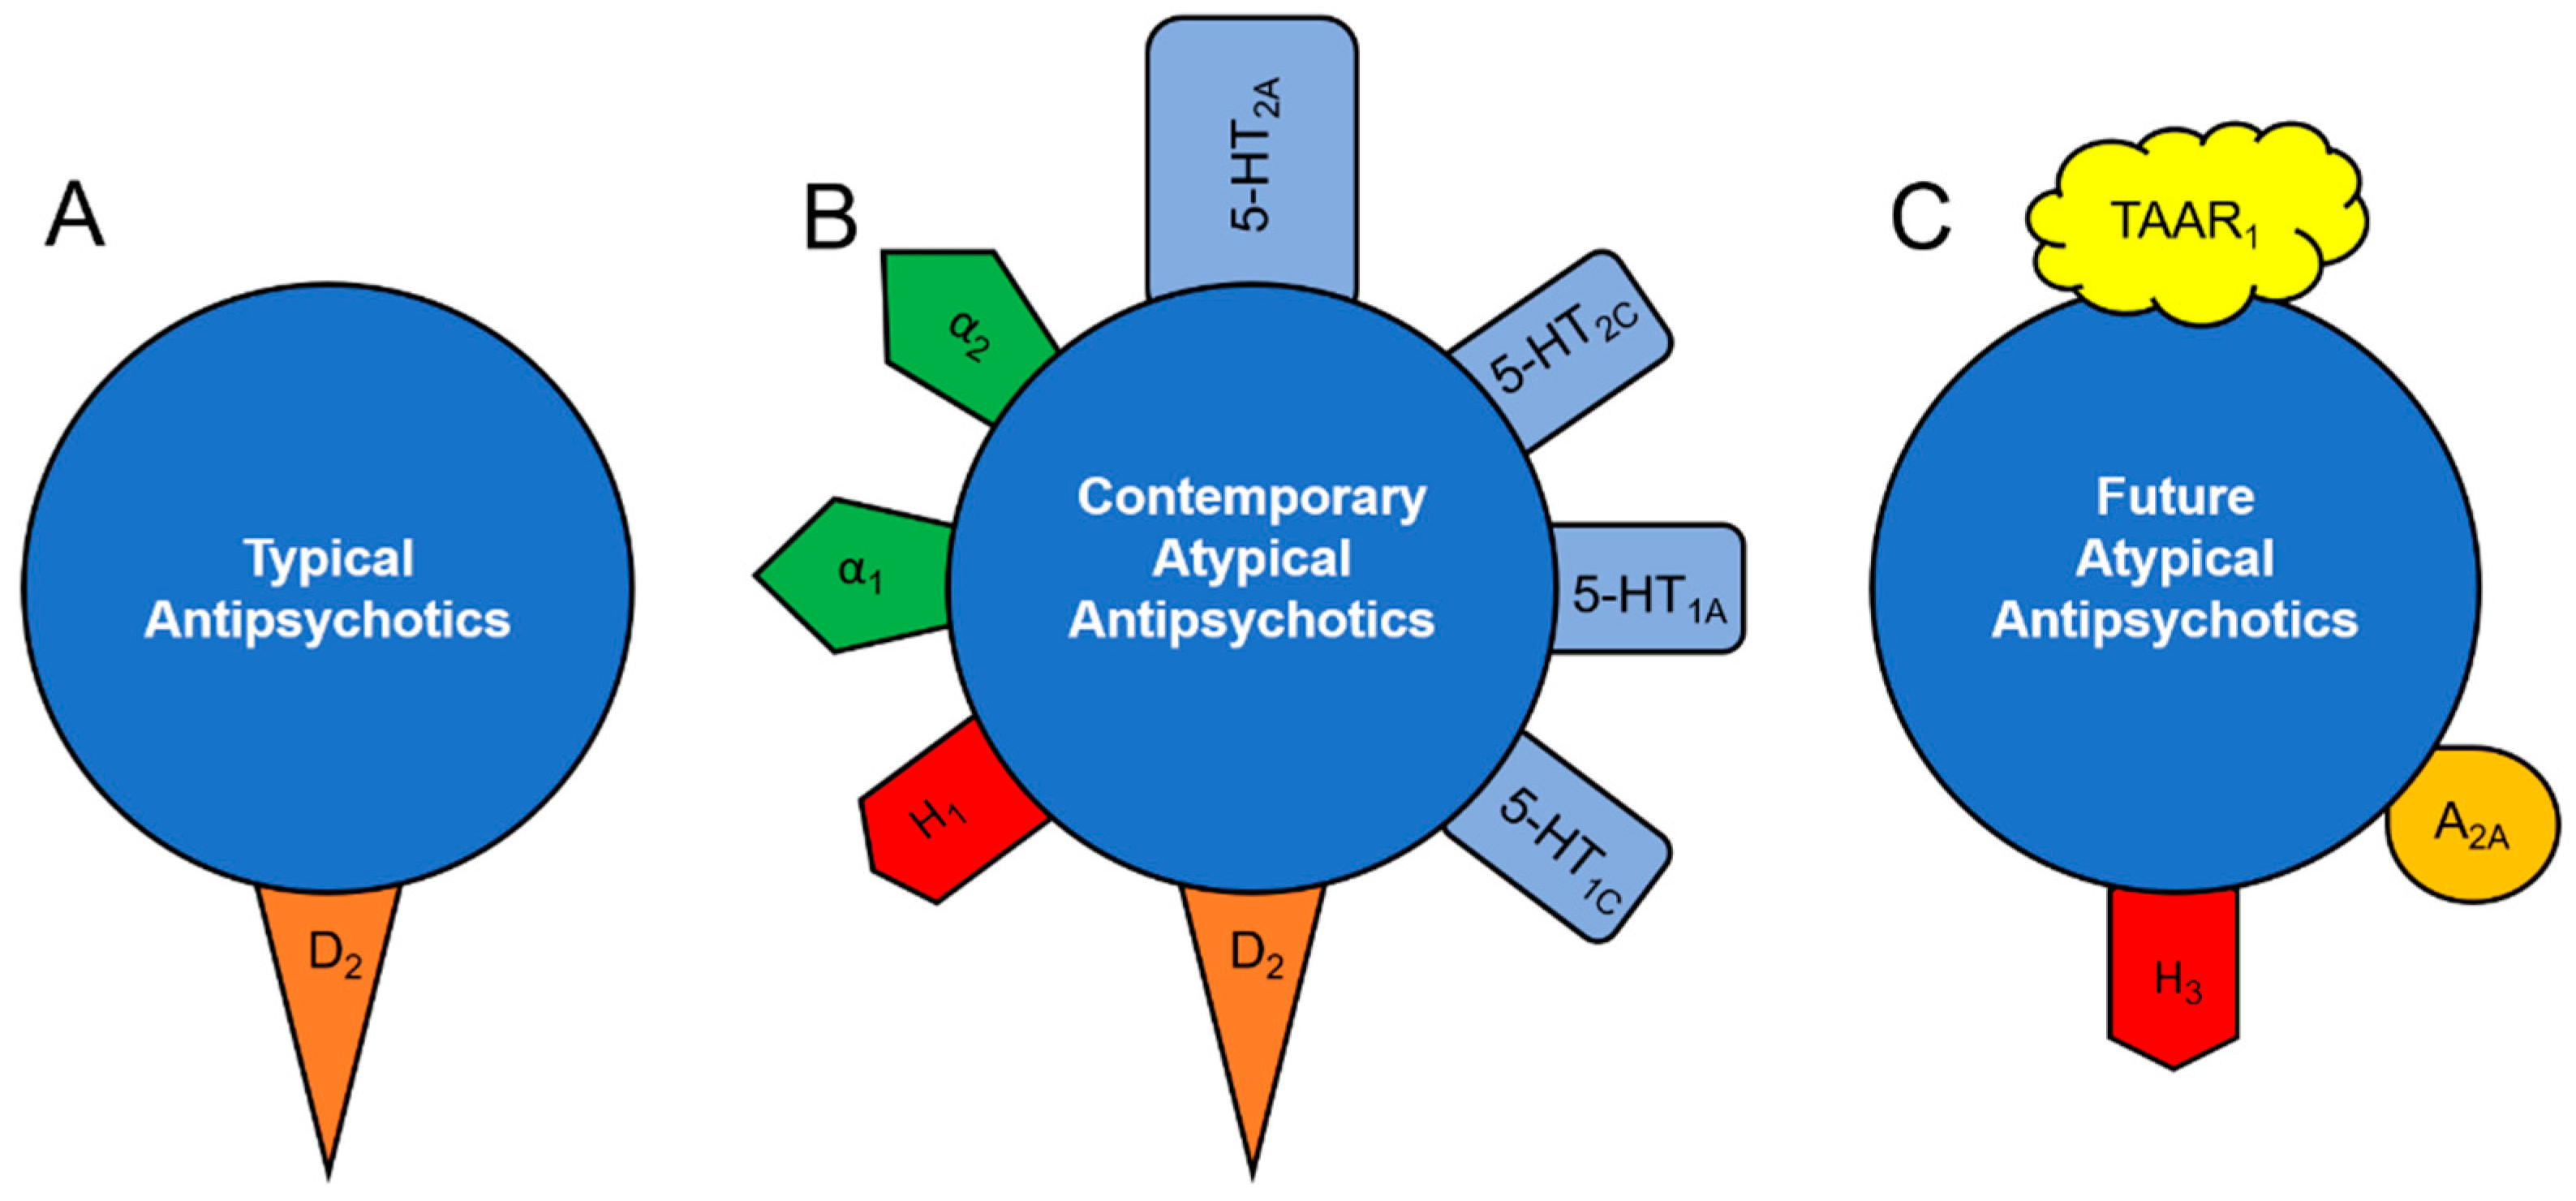 antipsychotics stages